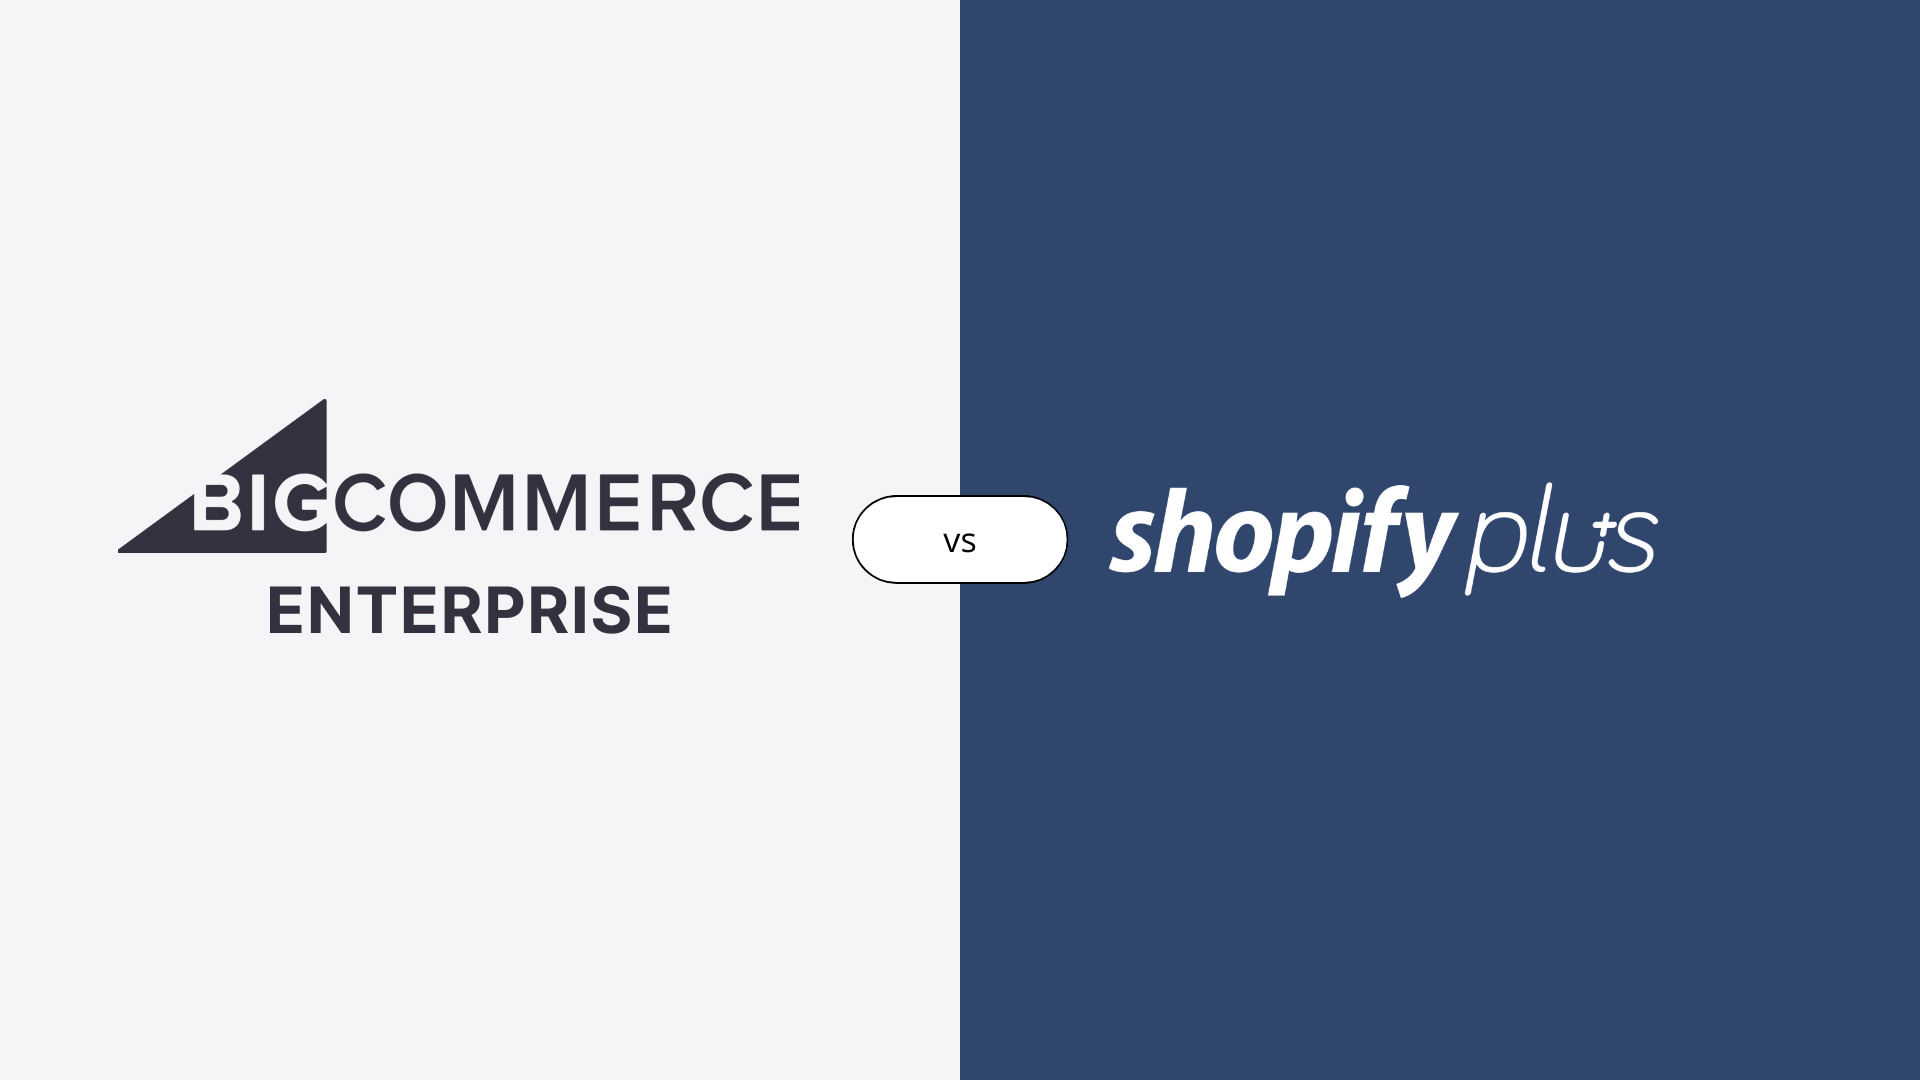 Shopify Plus εναντίον Bigcommerce Enterprise: Ποια πλατφόρμα είναι καλύτερη για την επιχείρησή σας;